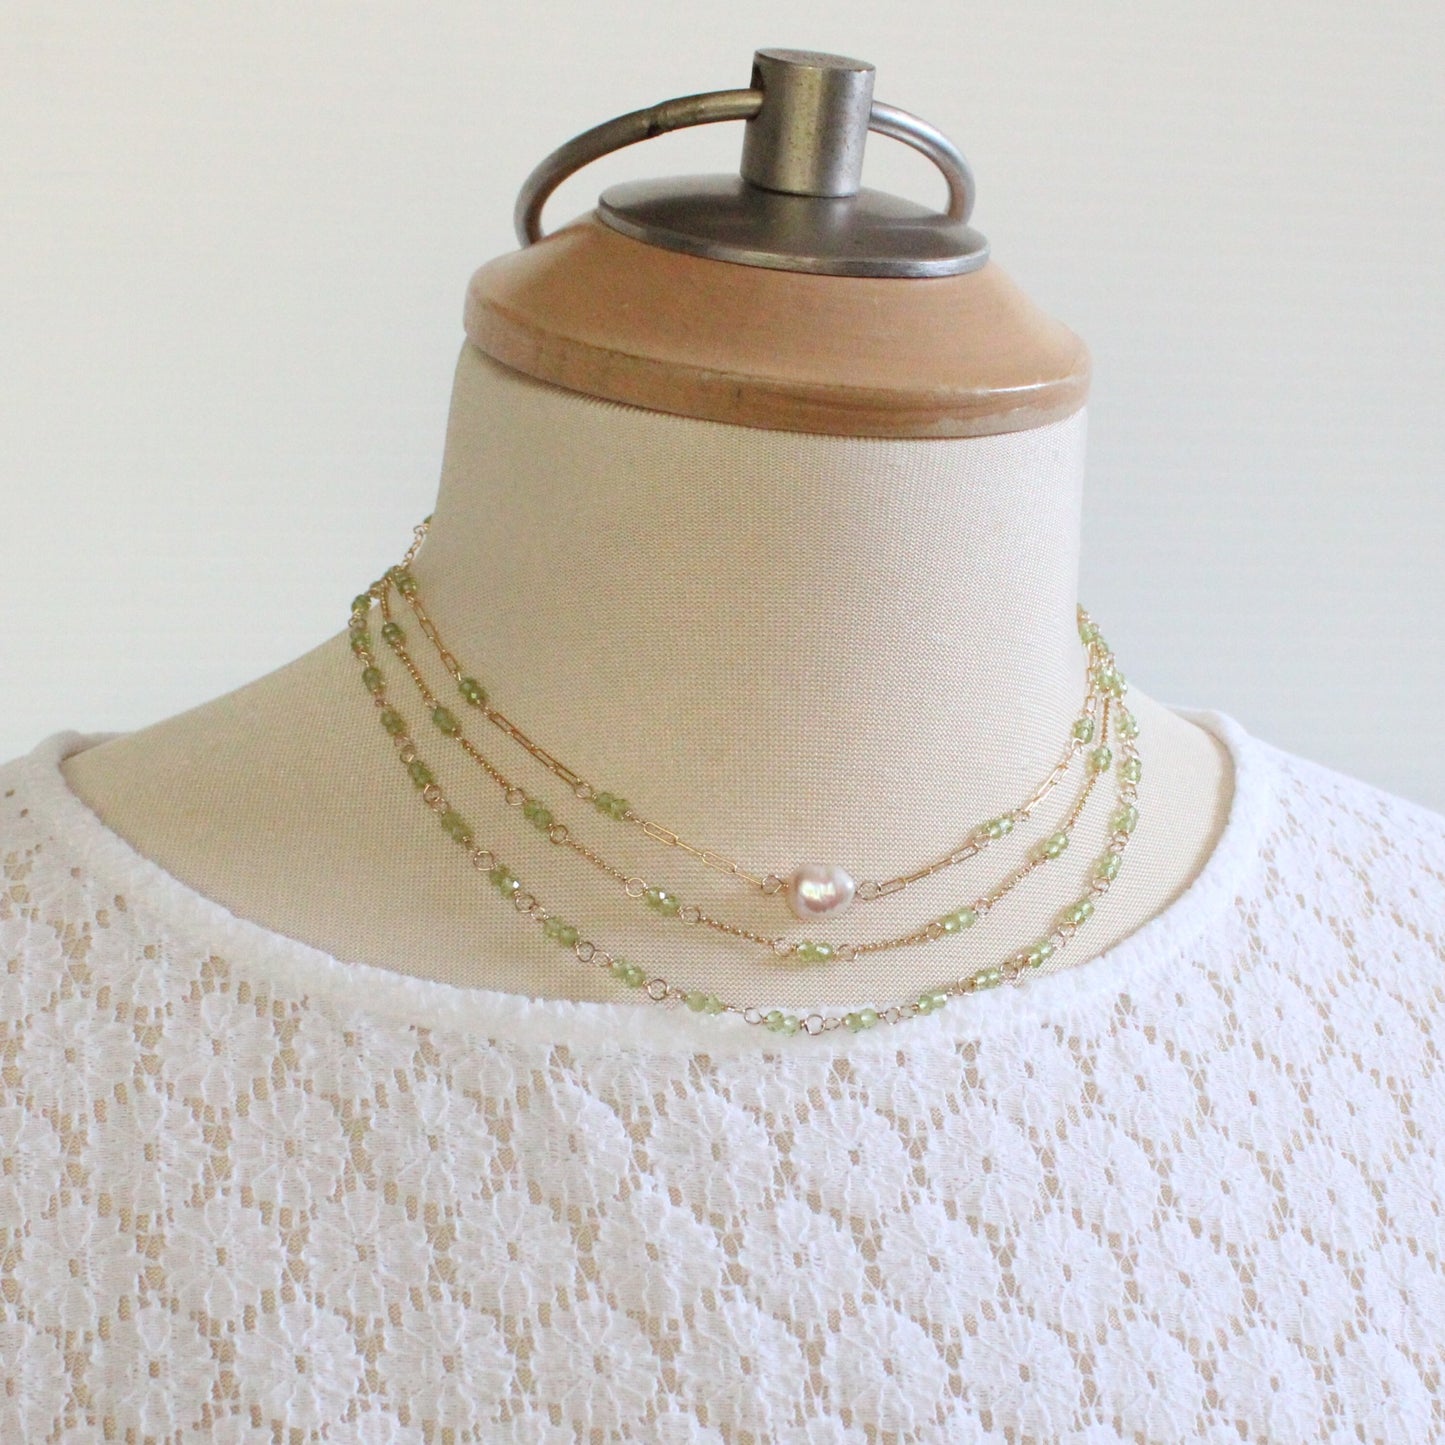 Peridot Gemstone Layering Necklace - Sarah